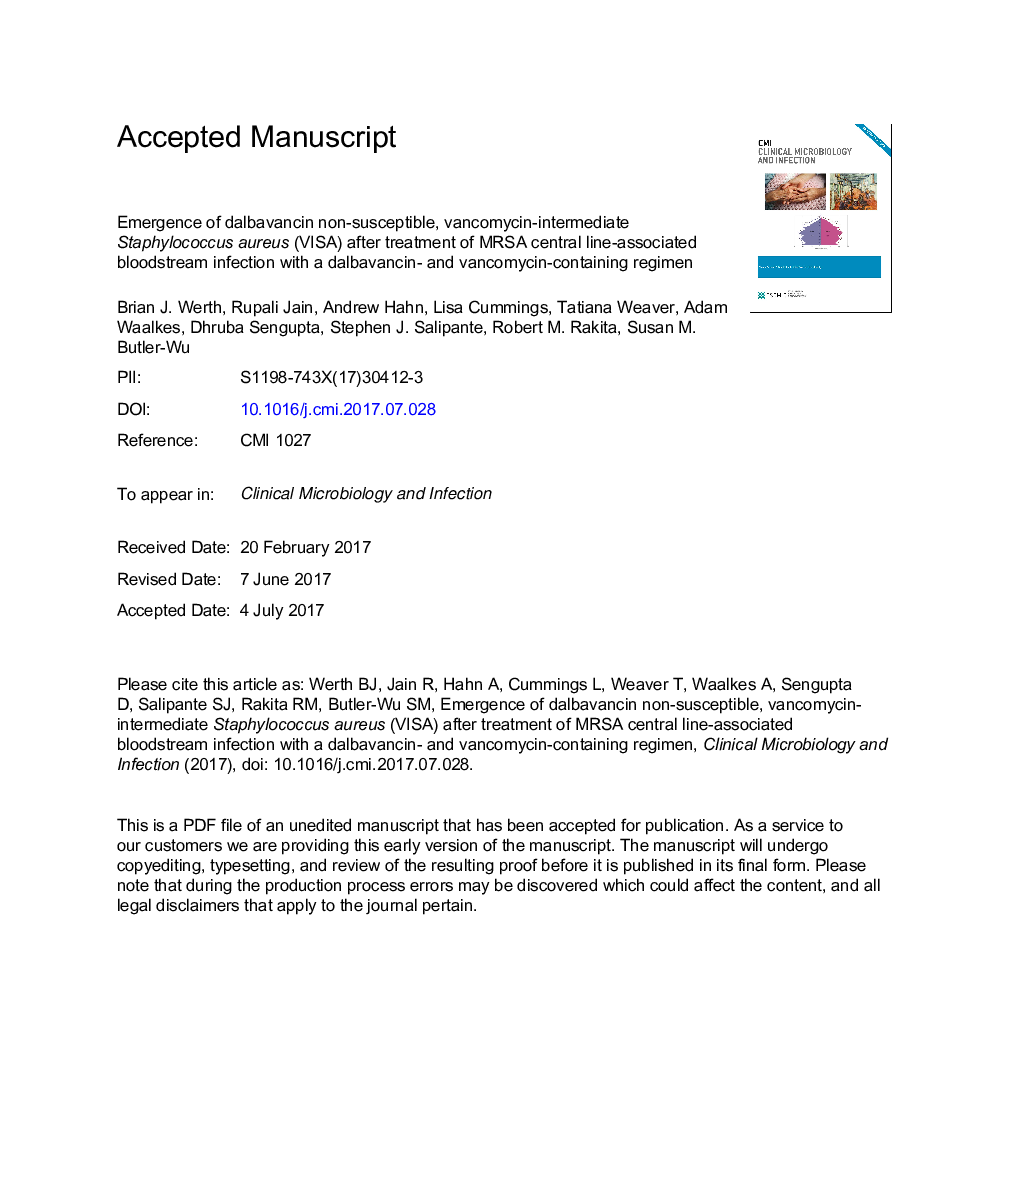 Emergence of dalbavancin non-susceptible, vancomycin-intermediate Staphylococcus aureus (VISA) after treatment of MRSA central line-associated bloodstream infection with a dalbavancin- and vancomycin-containing regimen